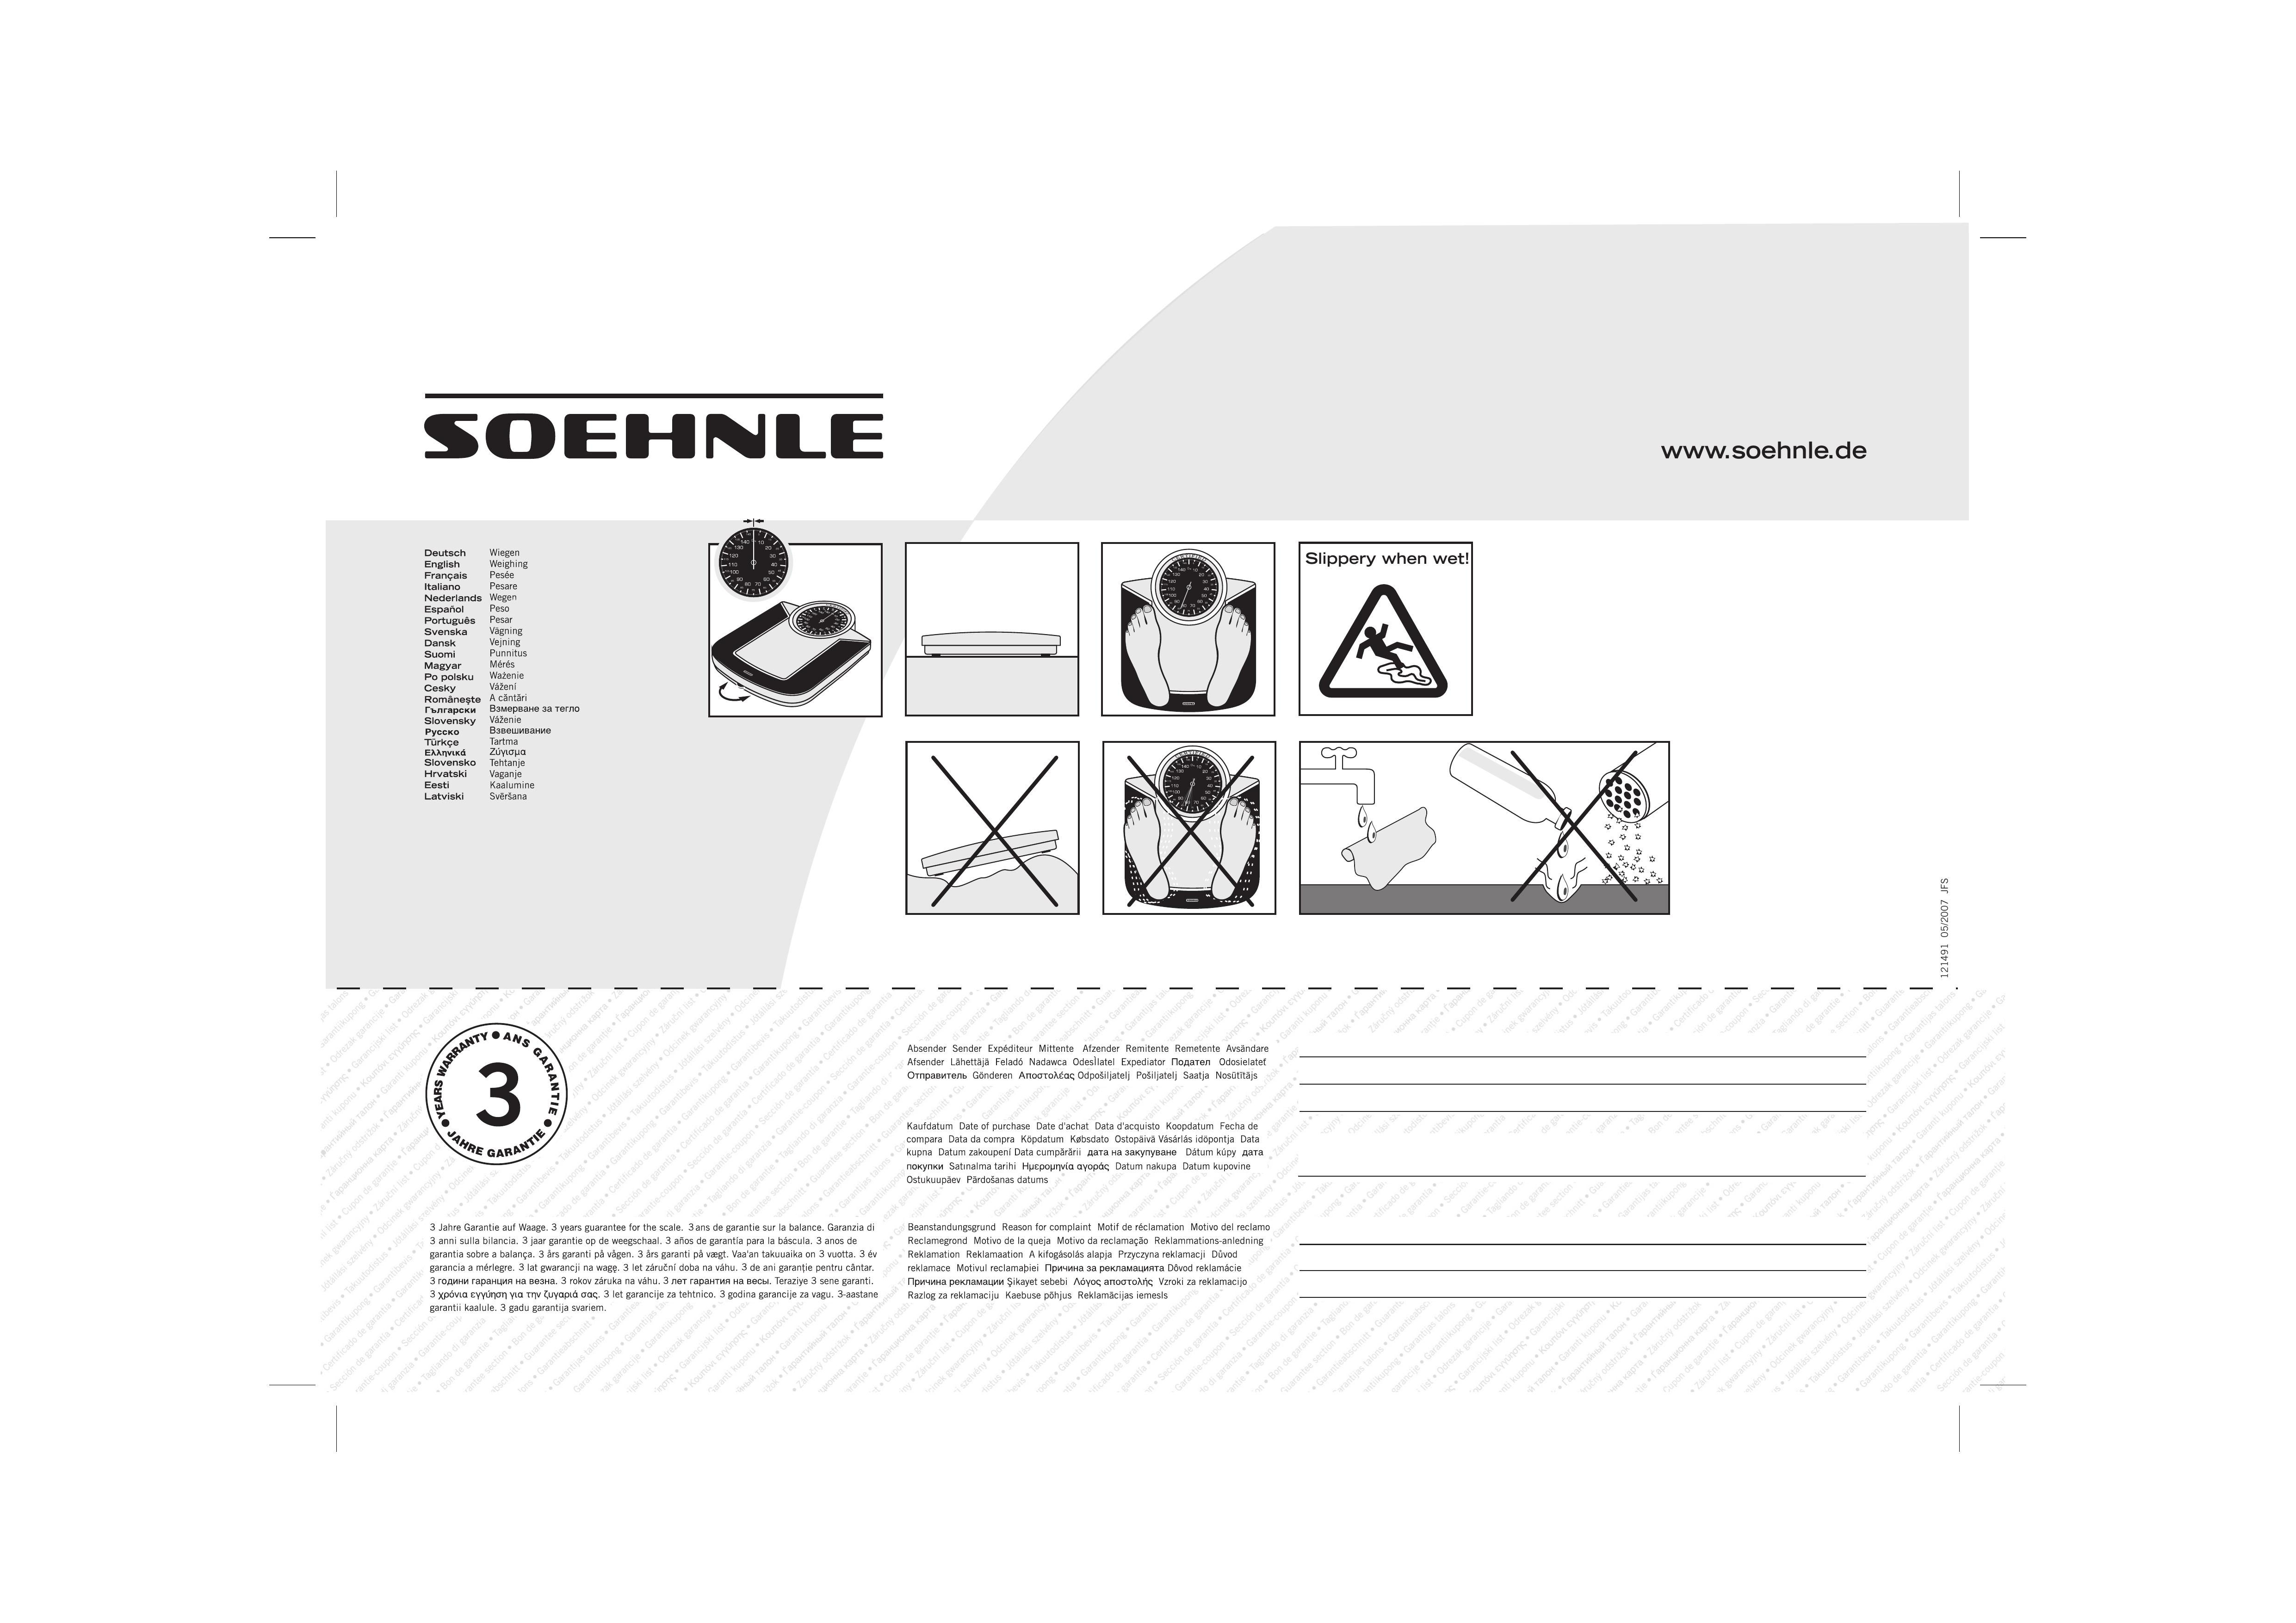 Soehnle 12149105 Ventilation Hood User Manual